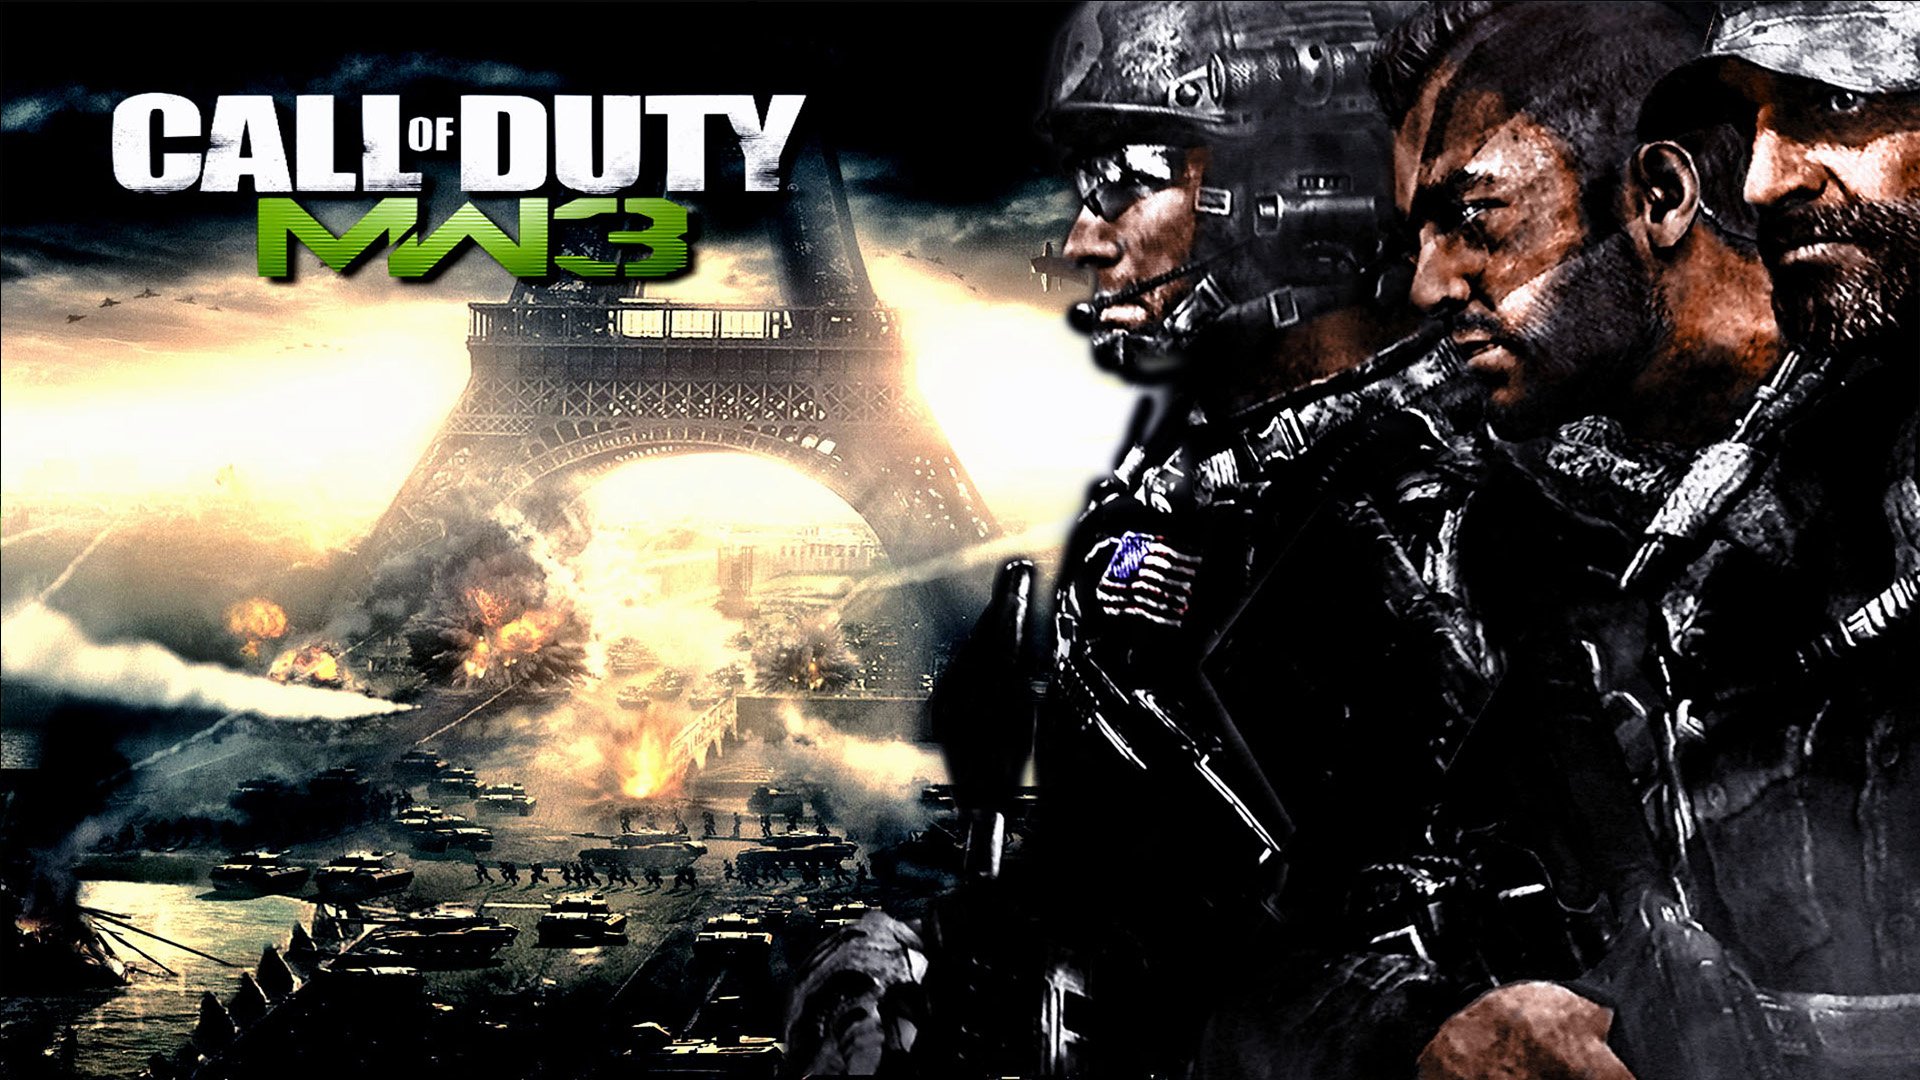 Call of Duty Modern Warfare 3 - часть 2 "Персона нон грата"